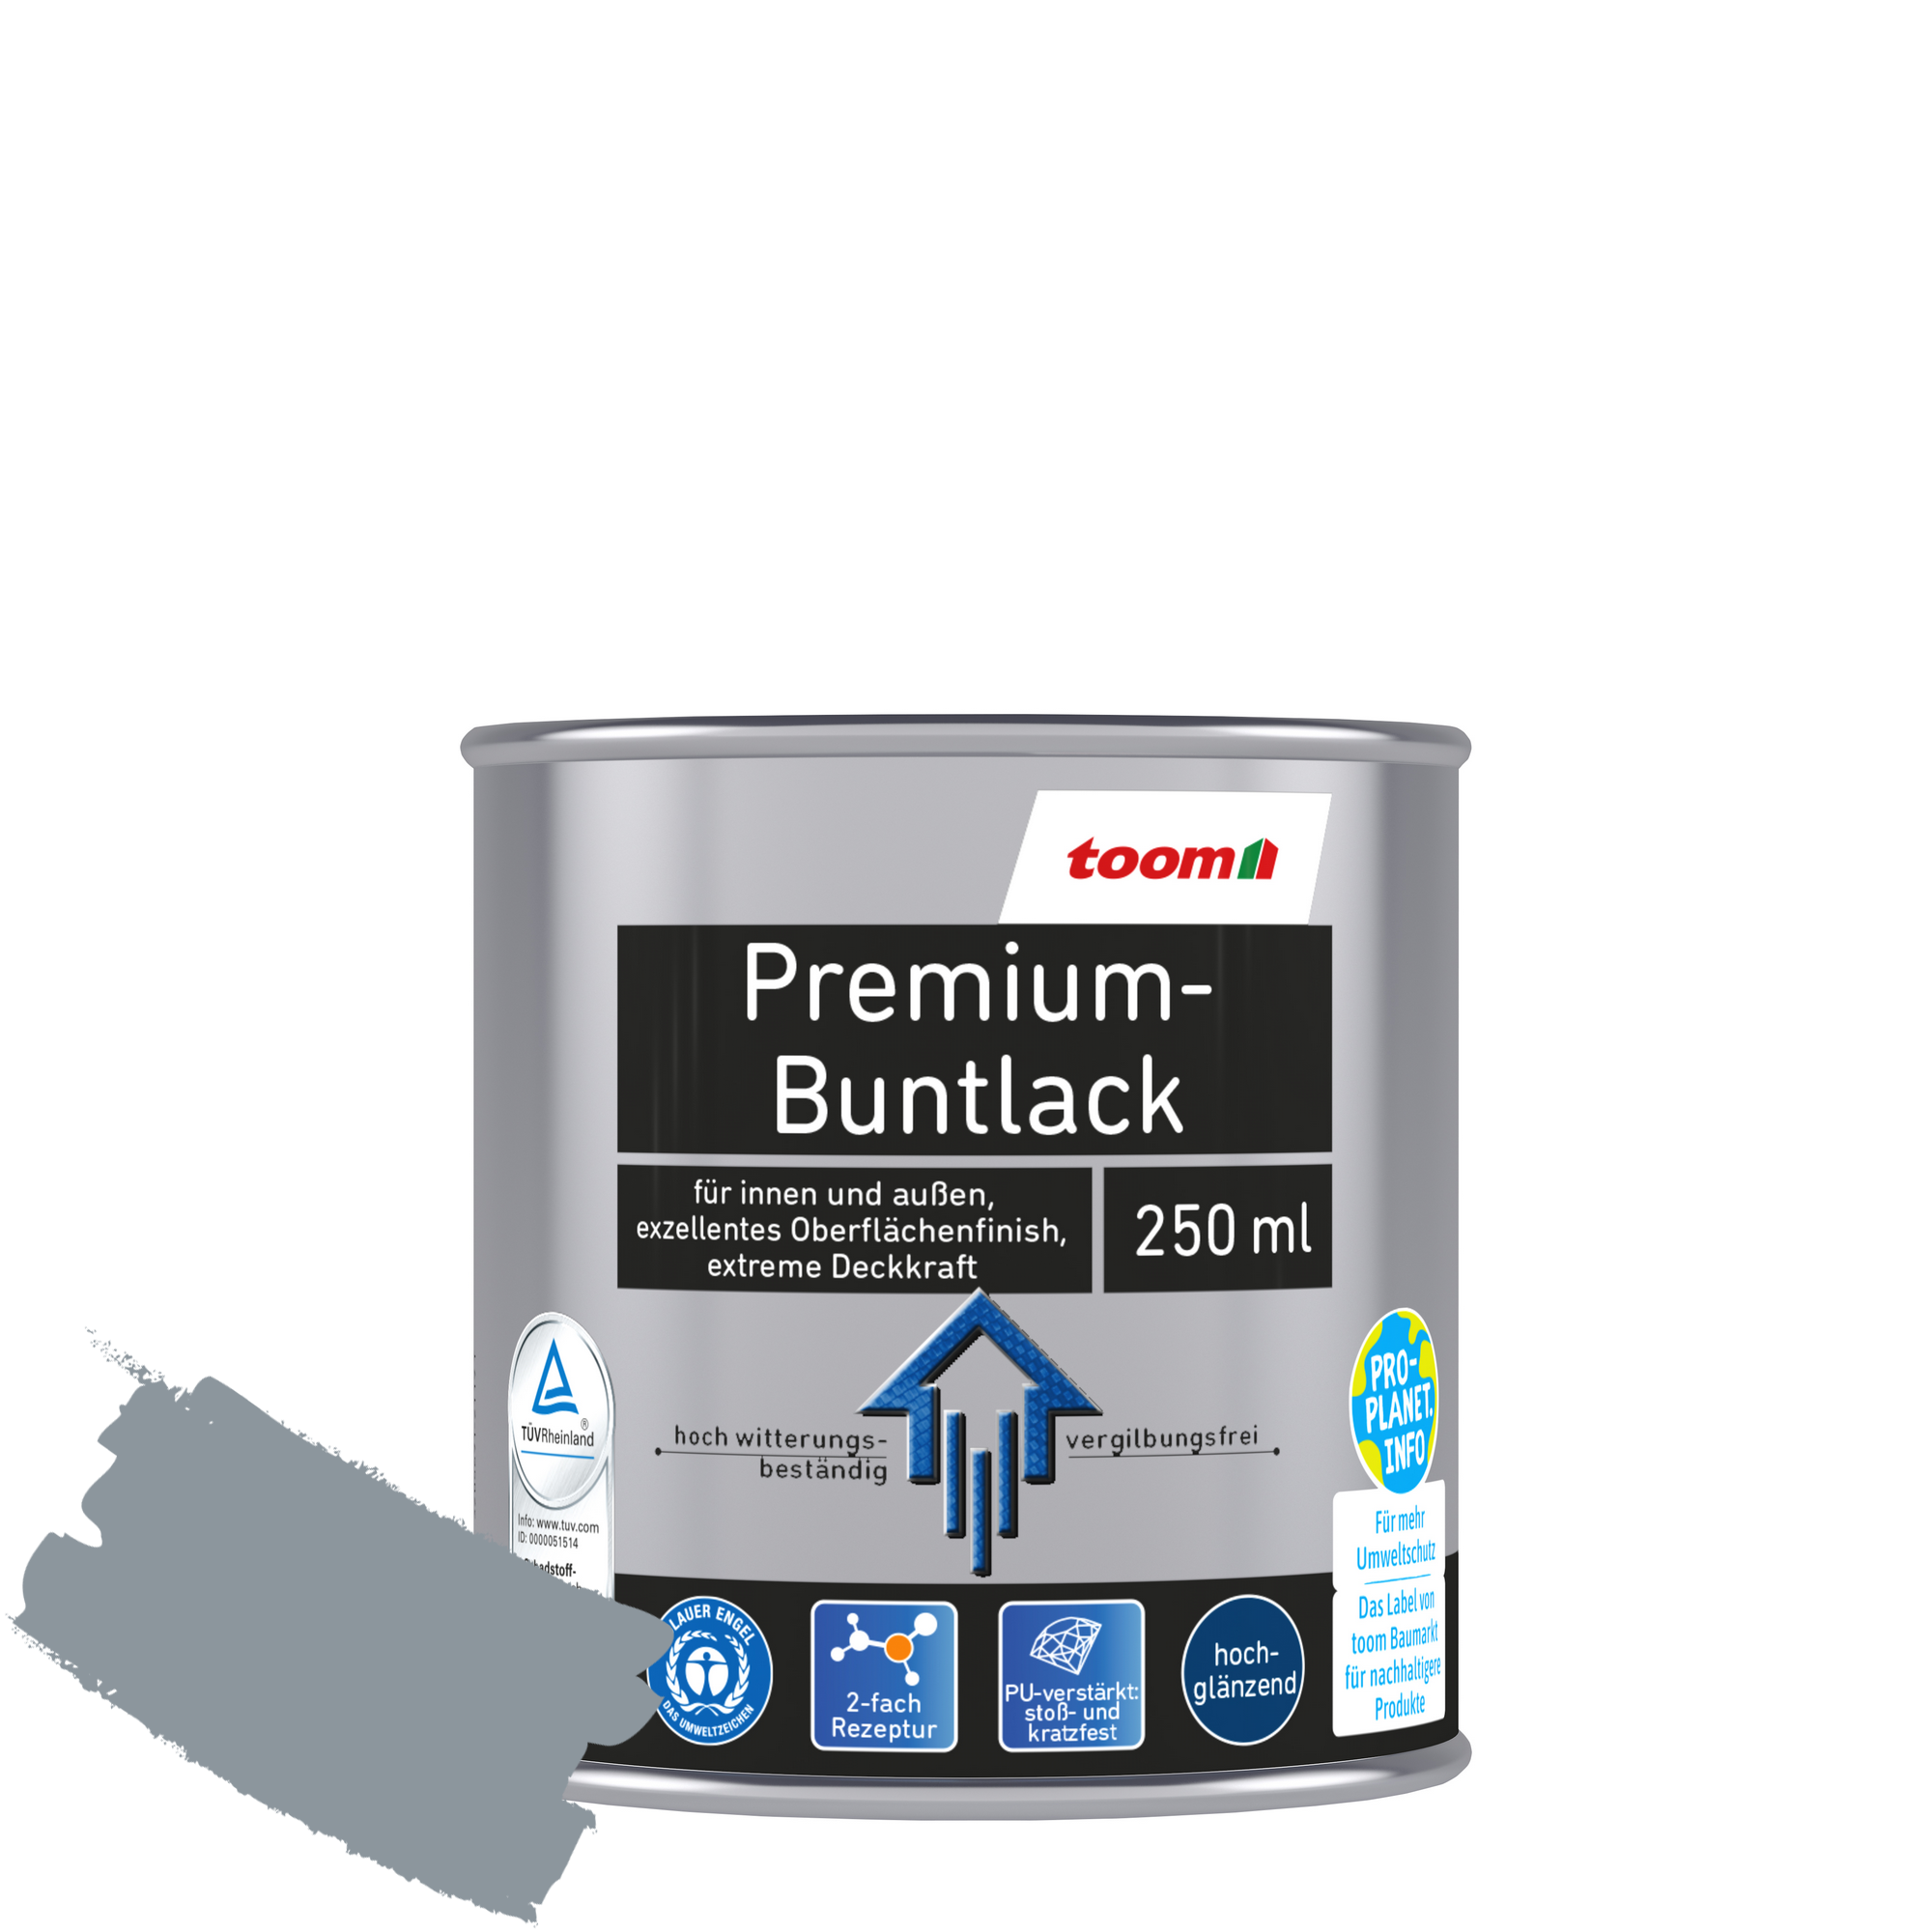 Premium-Buntlack silbergrau glänzend 250 ml + product picture